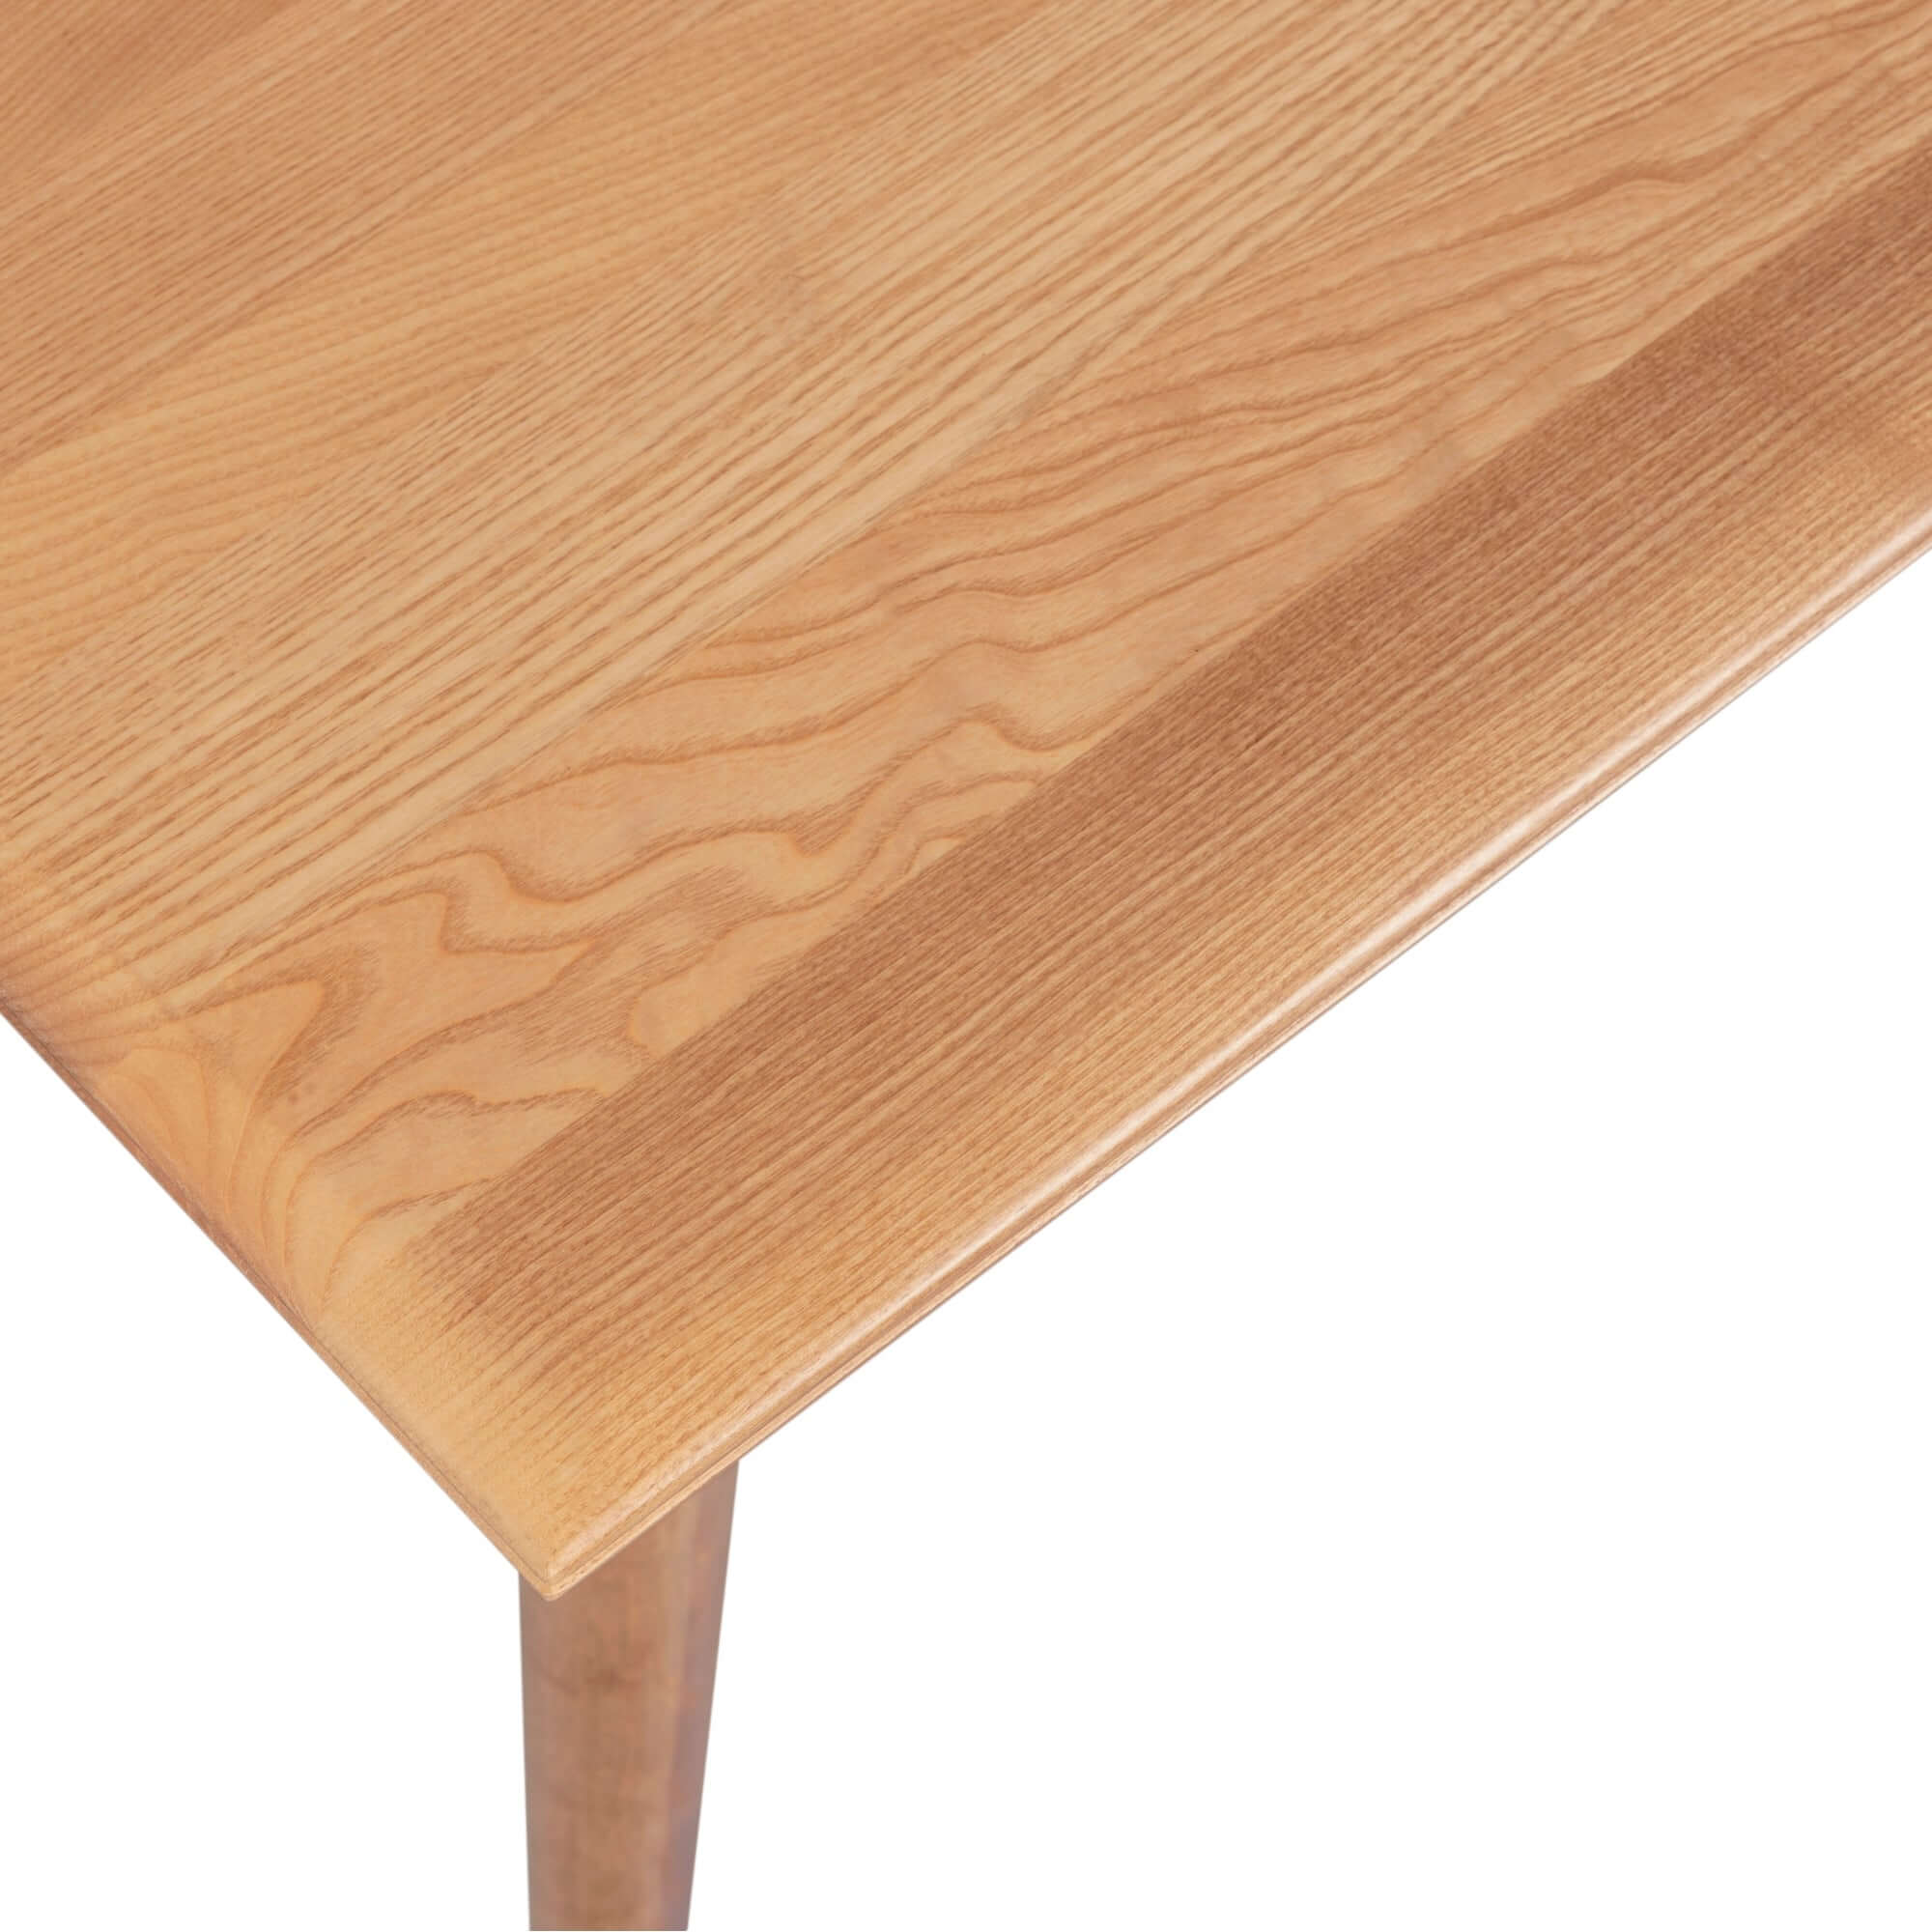 Emilio 180cm Ash Wood Dining Table | Scandinavian Style-Upinteriors